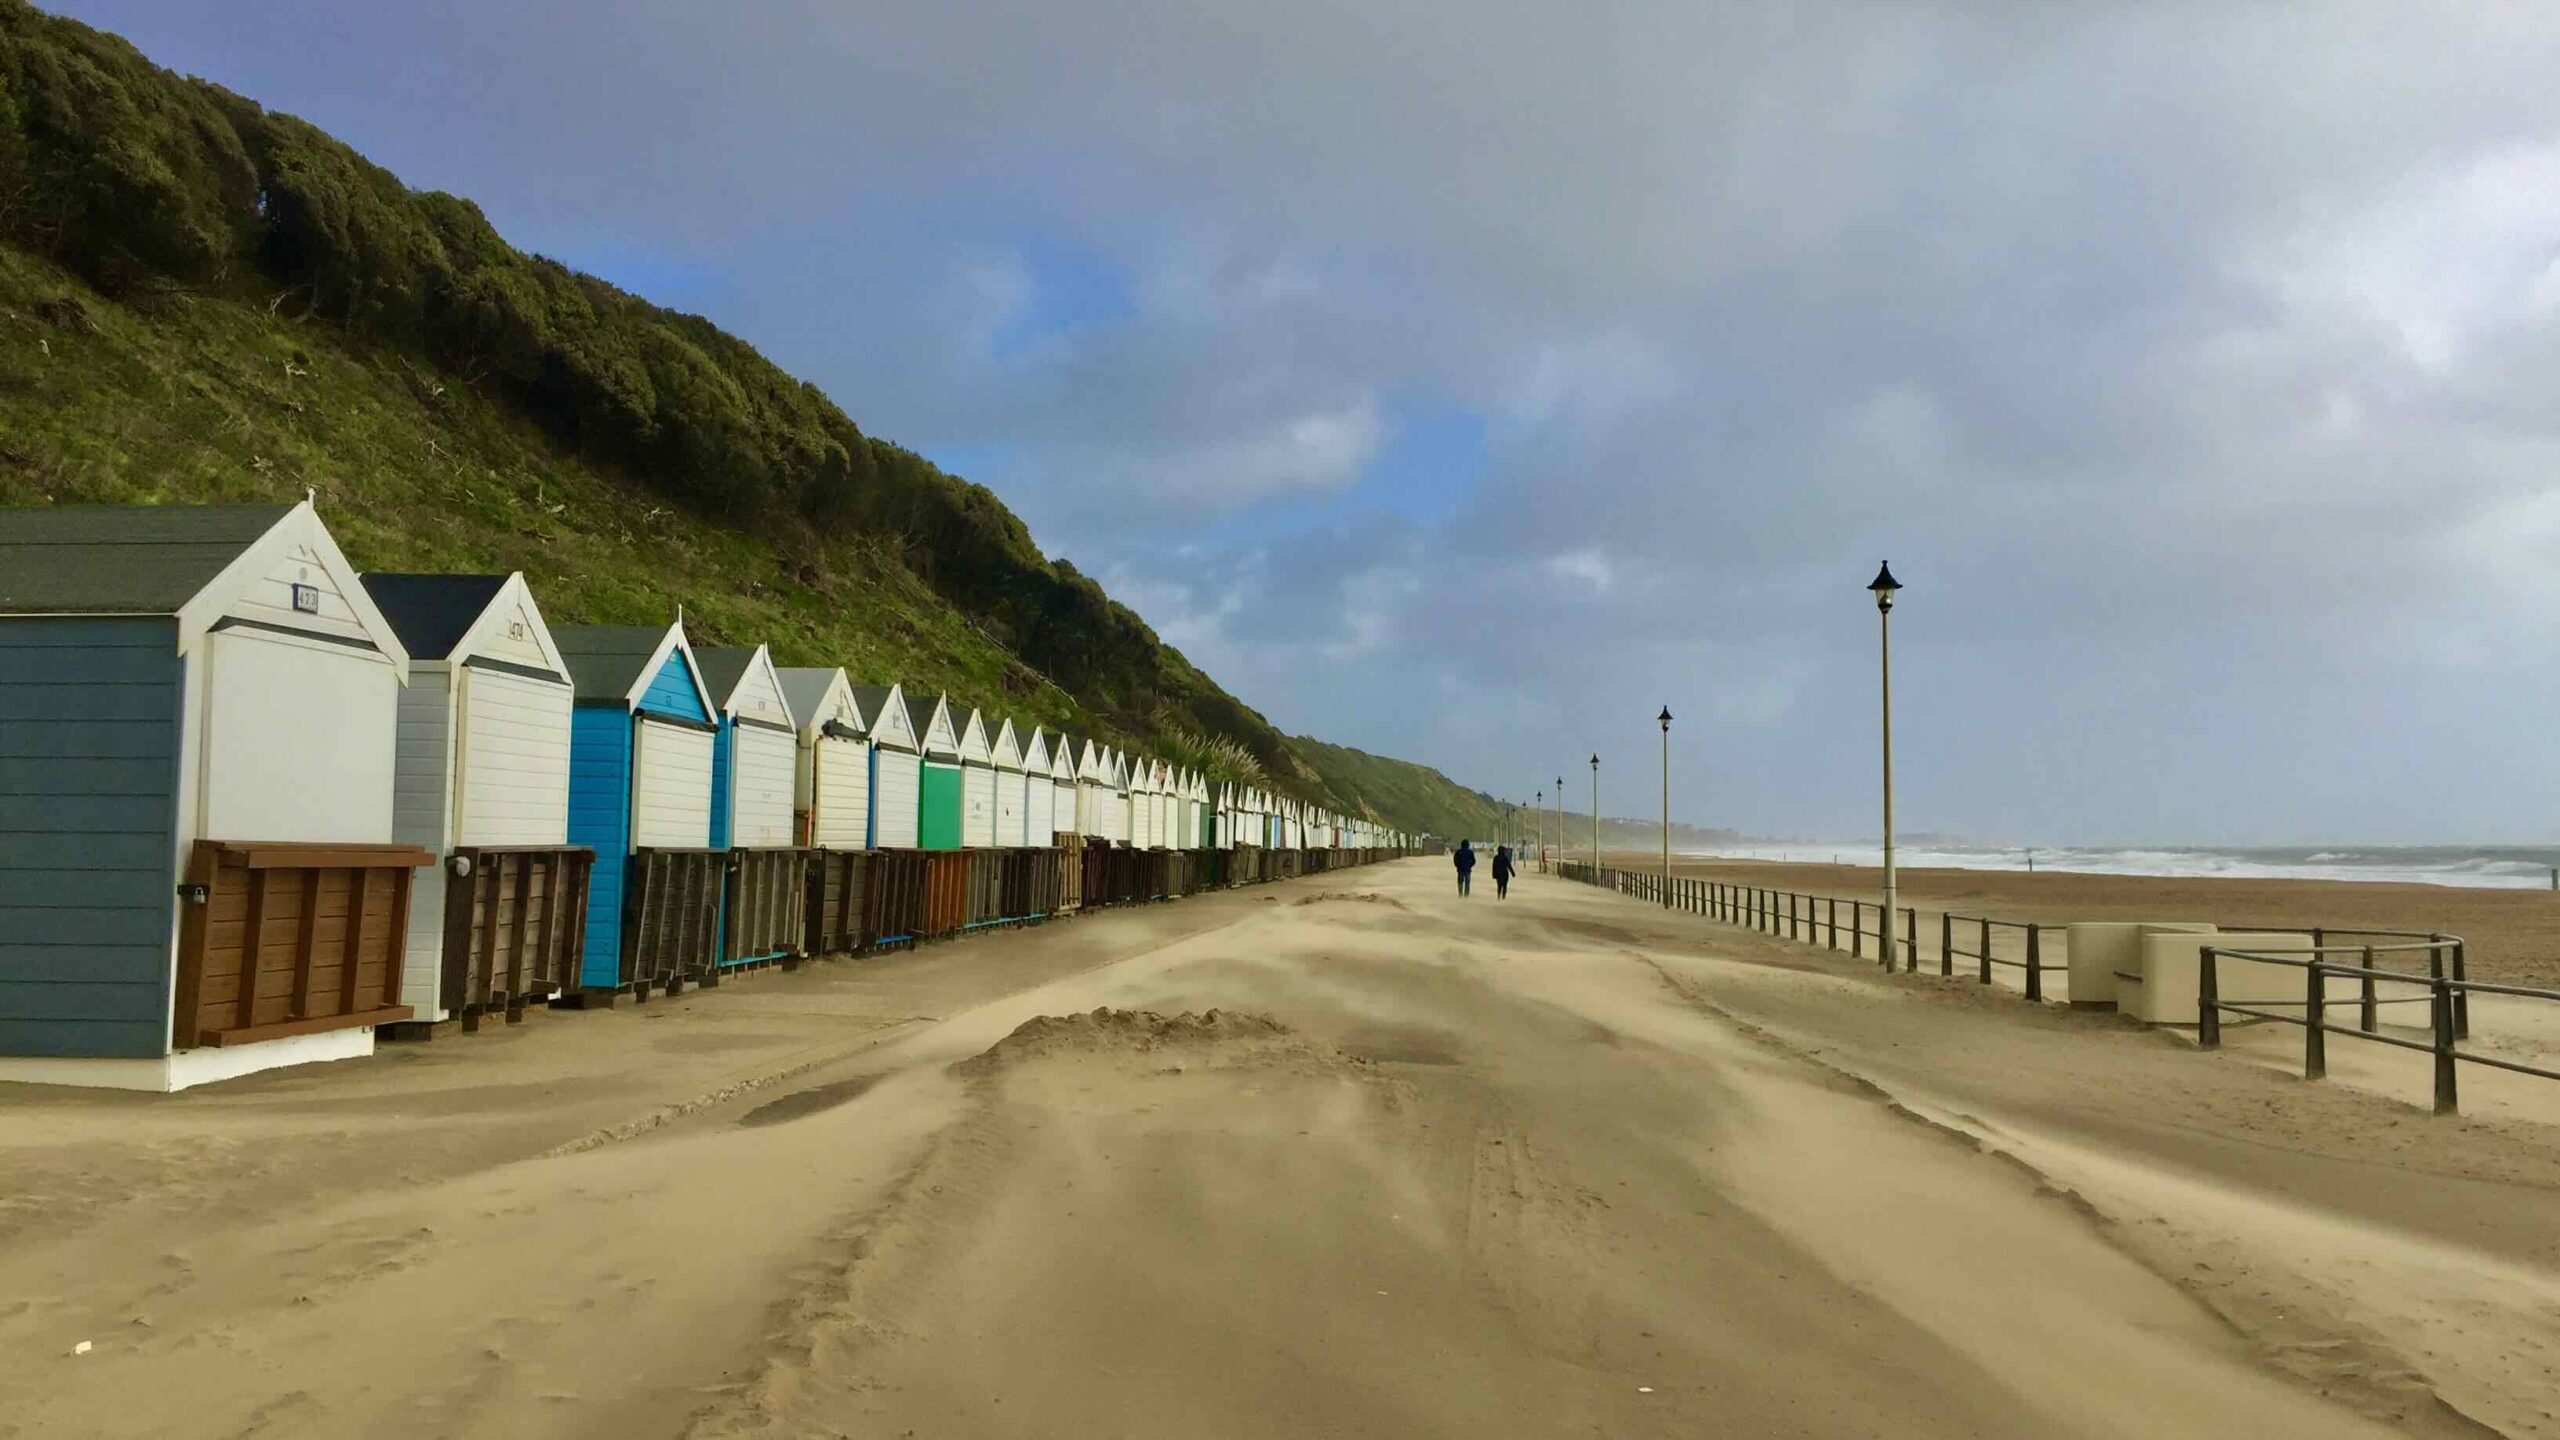 Bournemouth Beachfront off season by Maria fedele